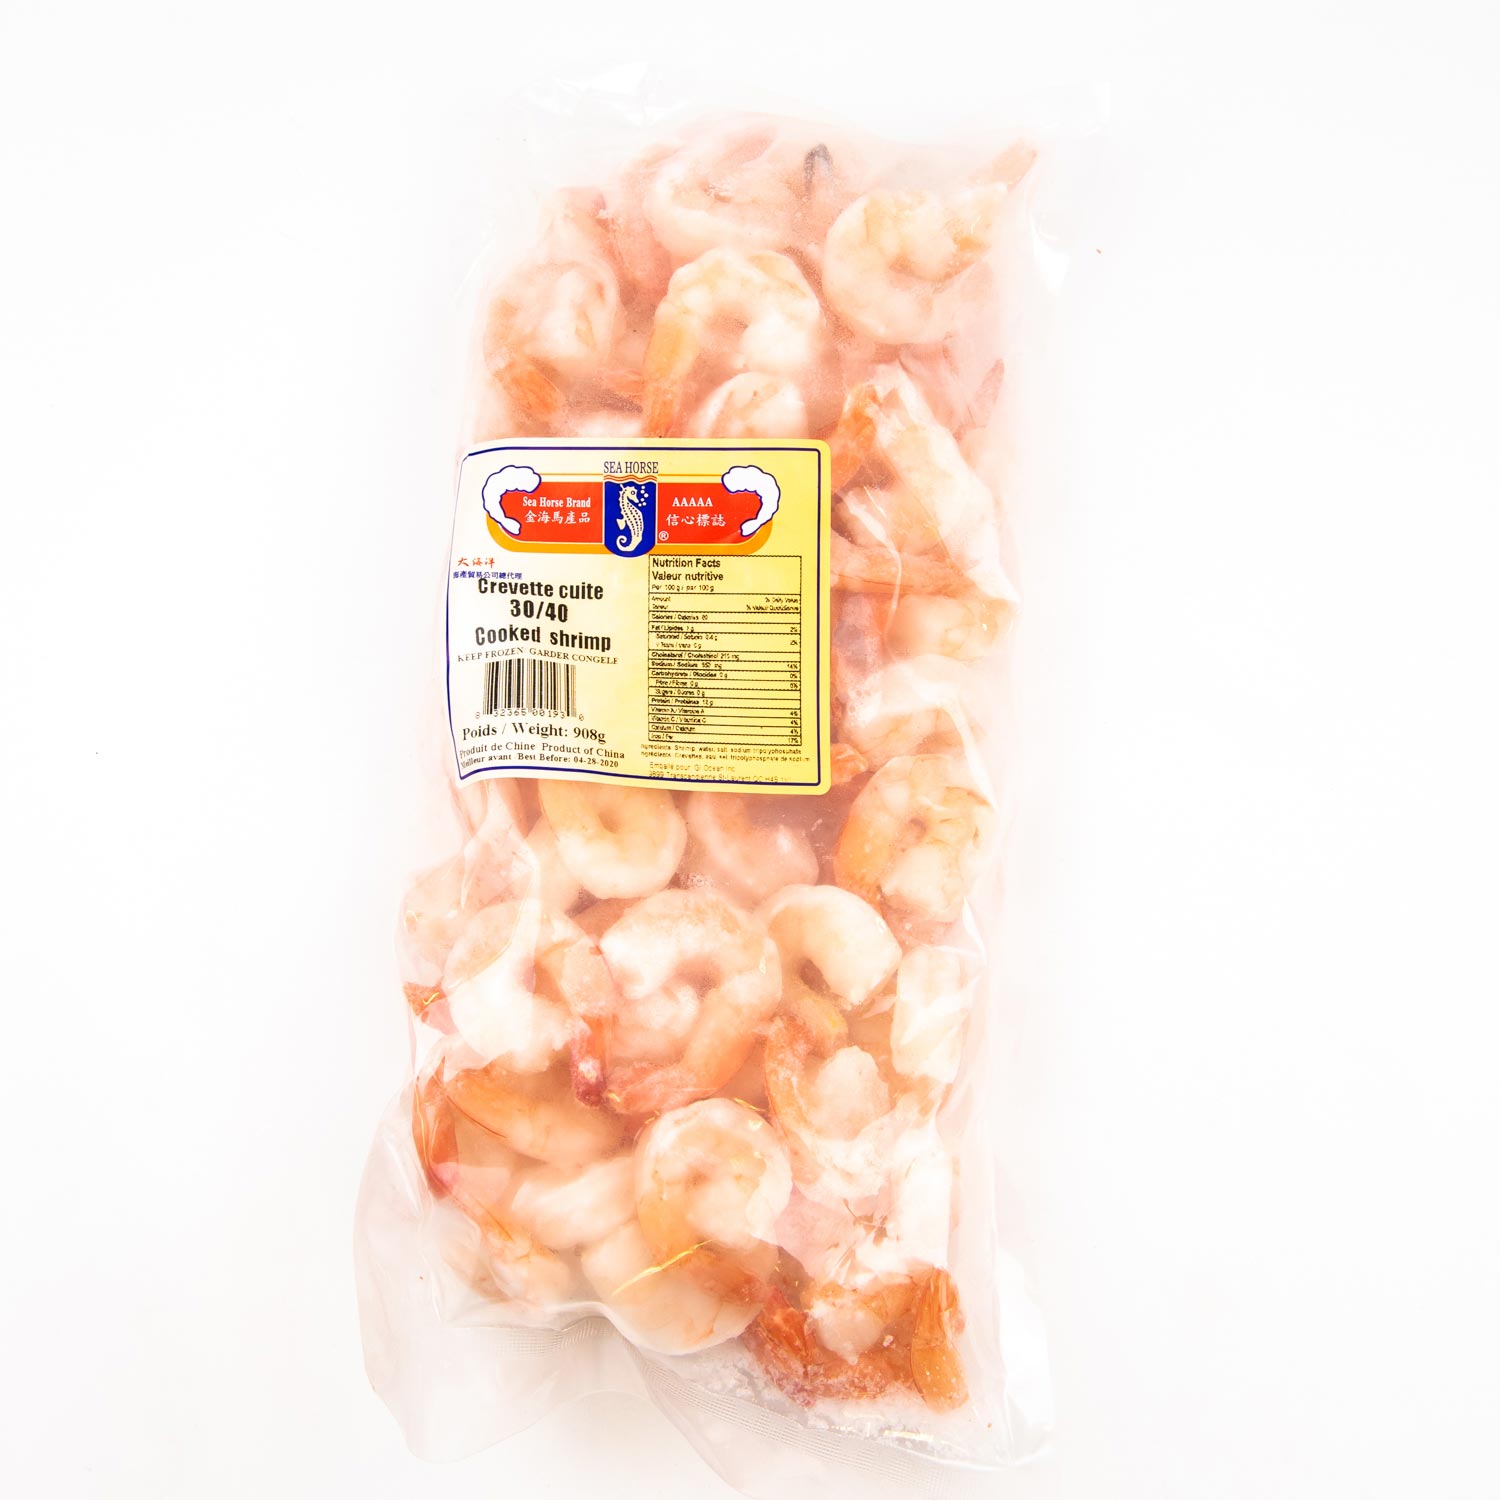 Cooked Shrimps 30/40 2 lb - Cooked shrimp